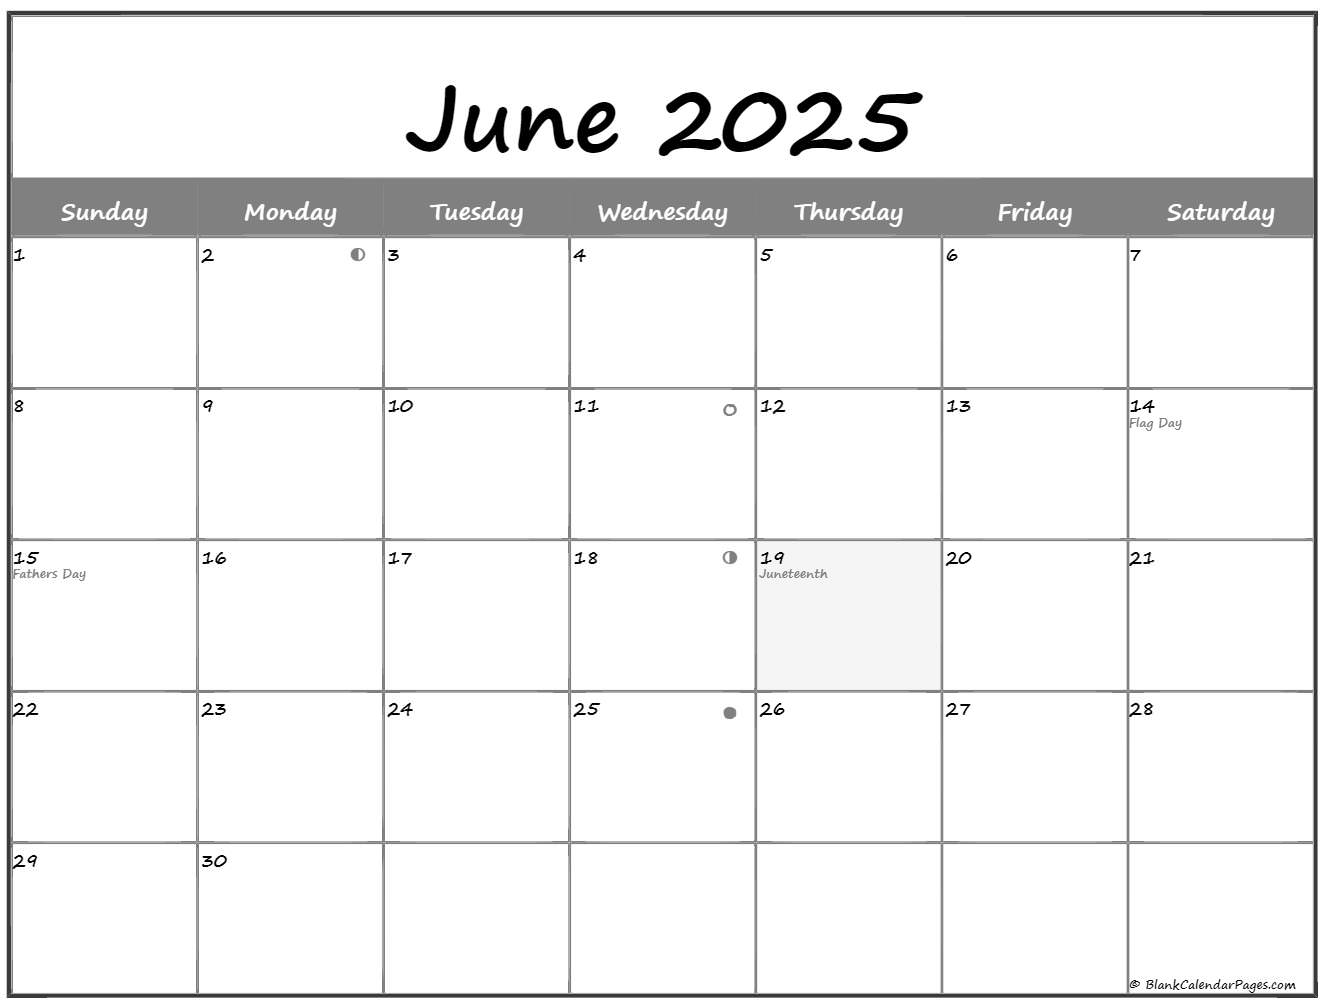 June 2025 Lunar Calendar Moon Phase Calendar